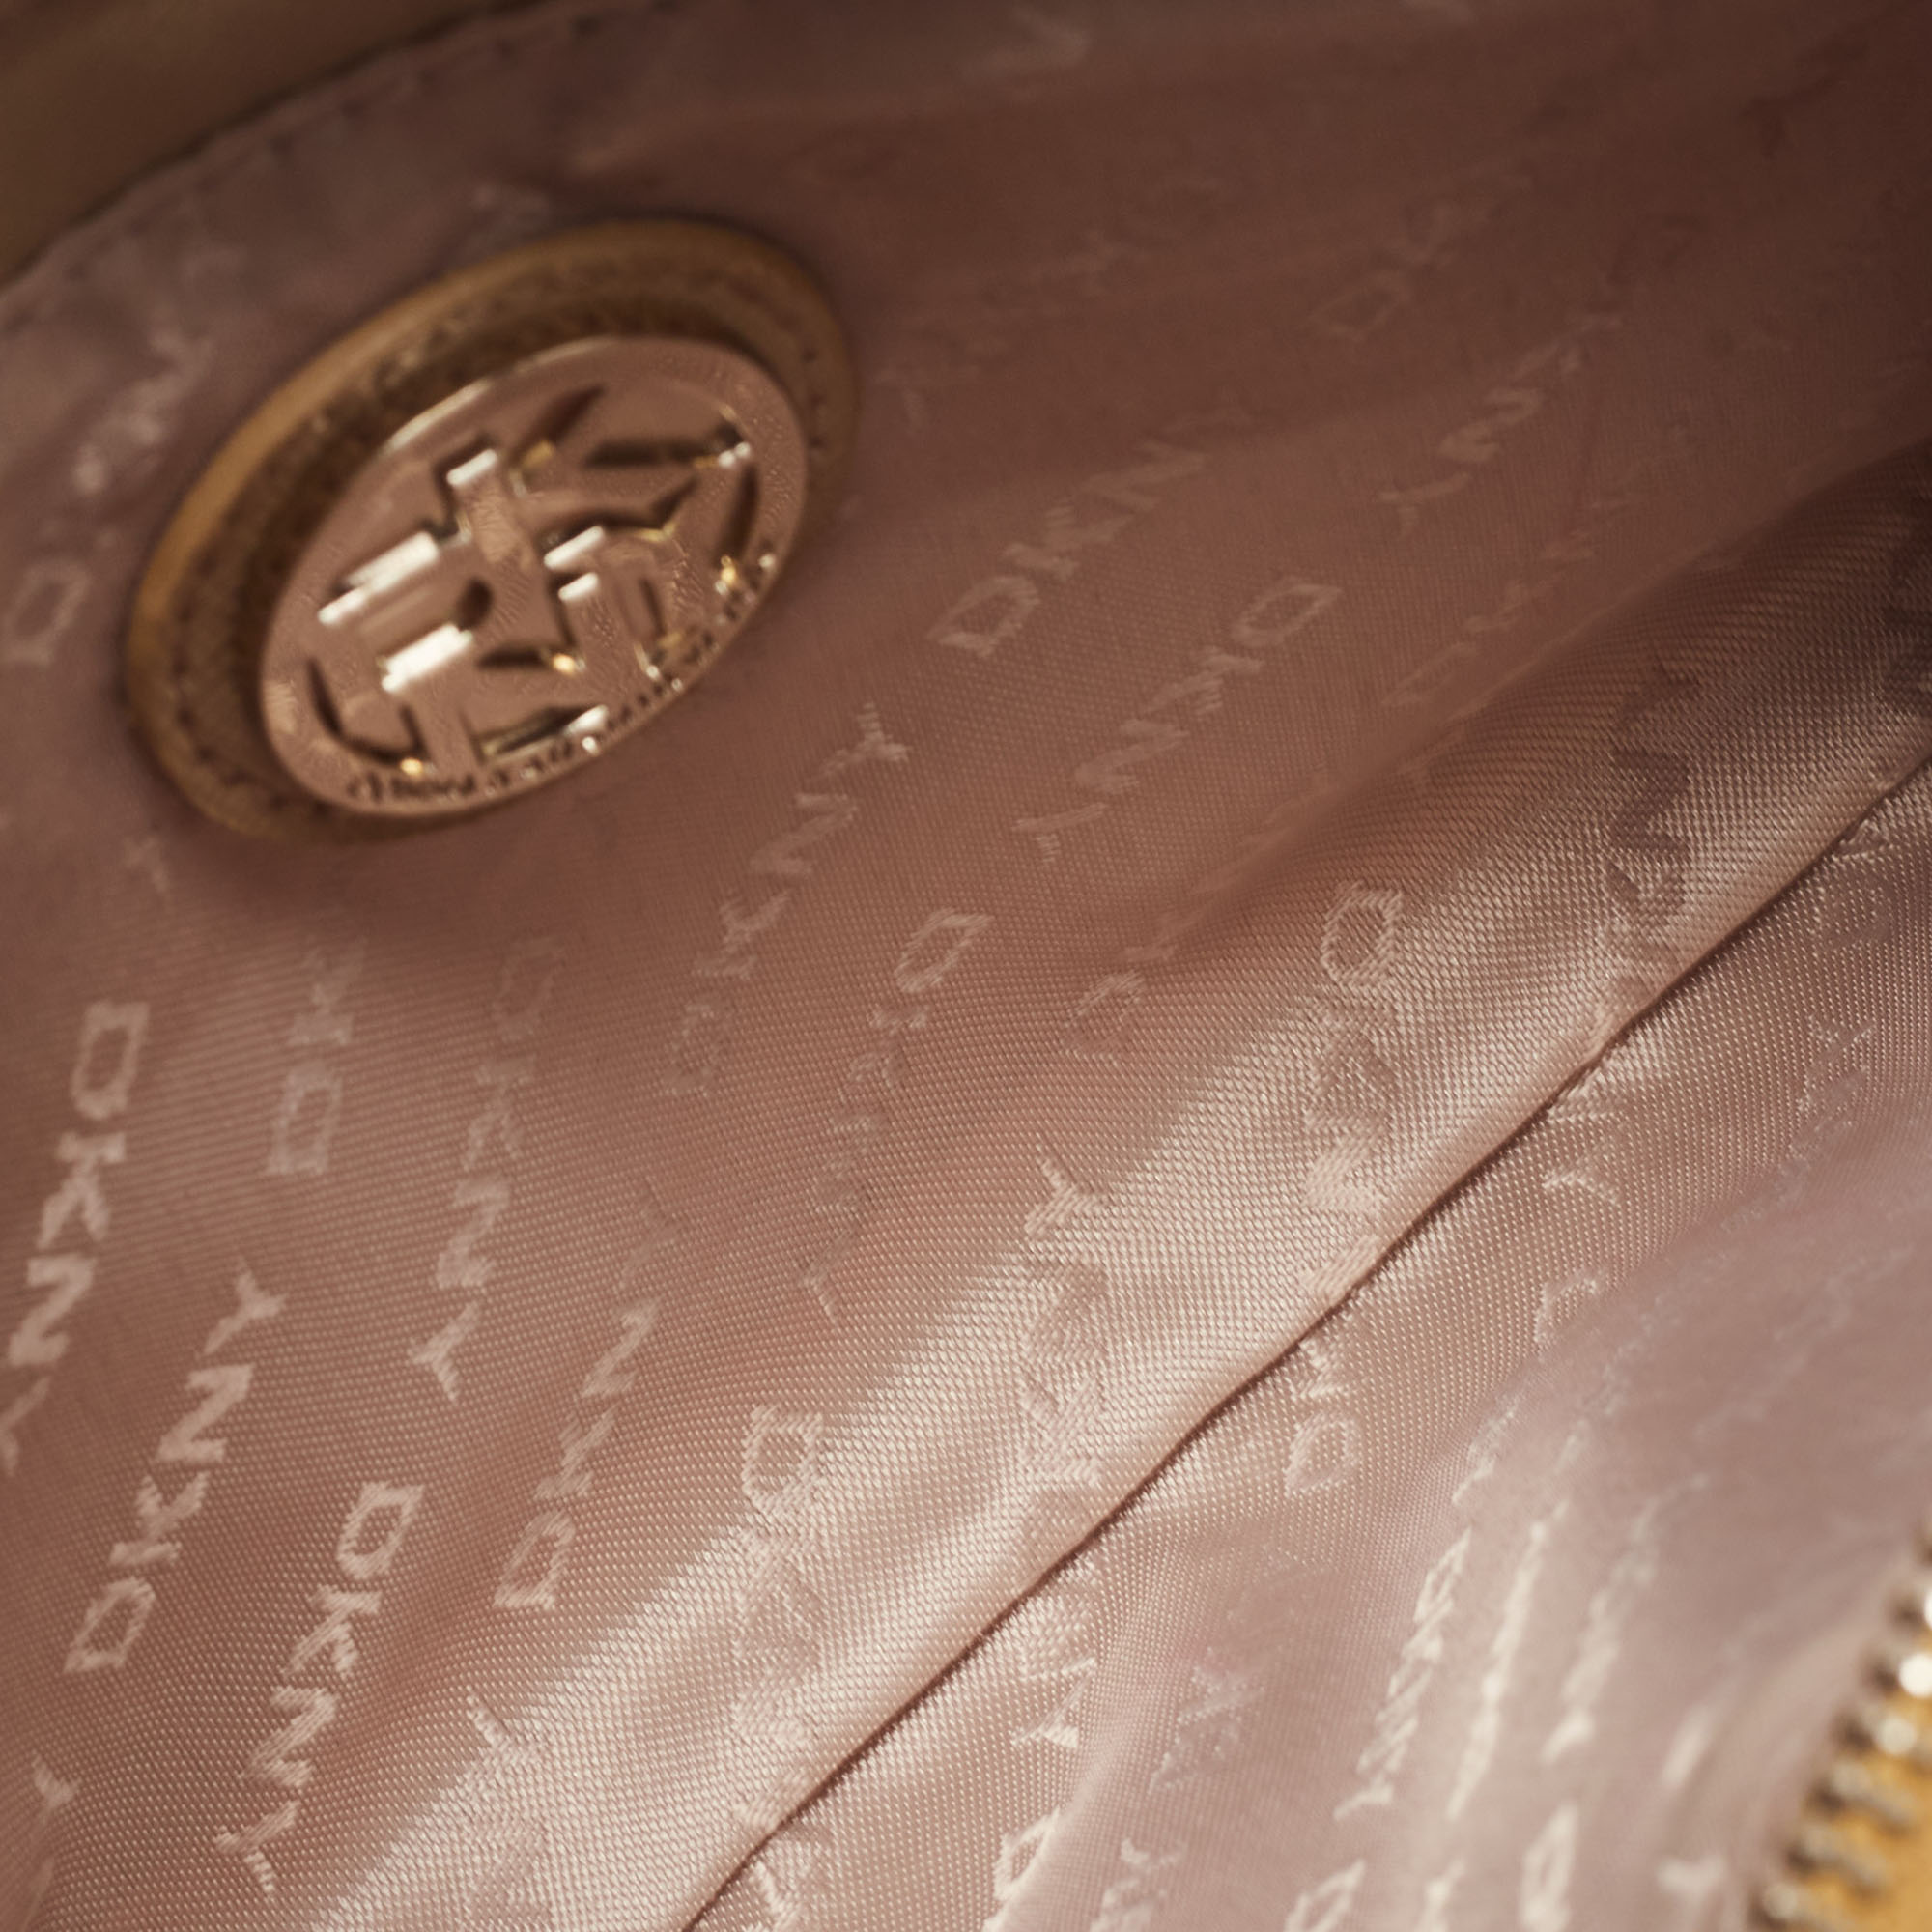 DKNY Tan Saffiano Leather Bryant Park Crossbody Bag